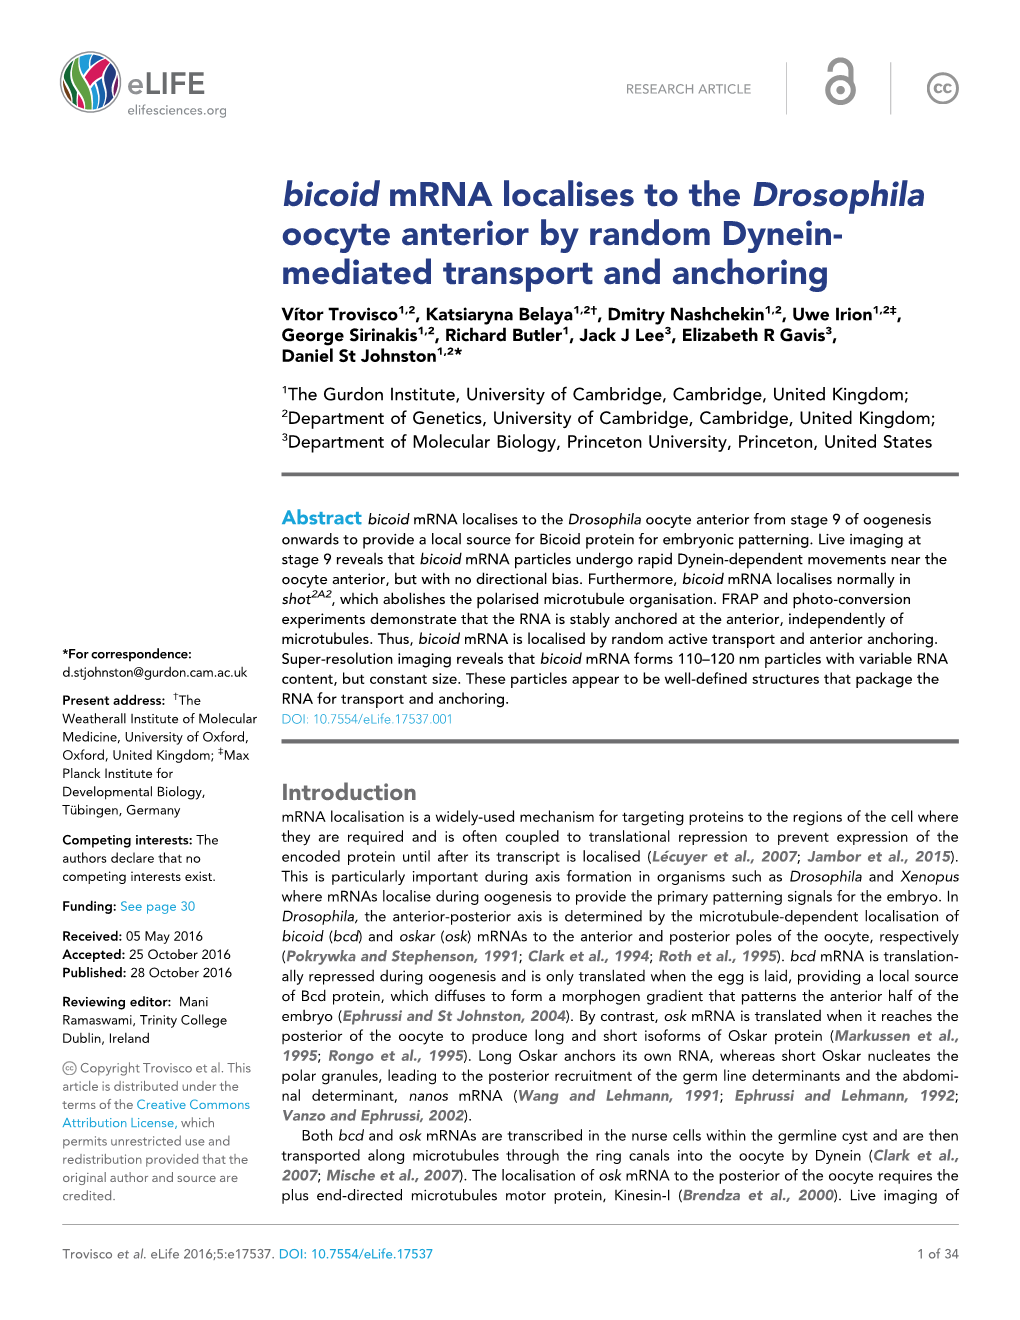 Bicoid Mrna Localises to the Drosophila Oocyte Anterior